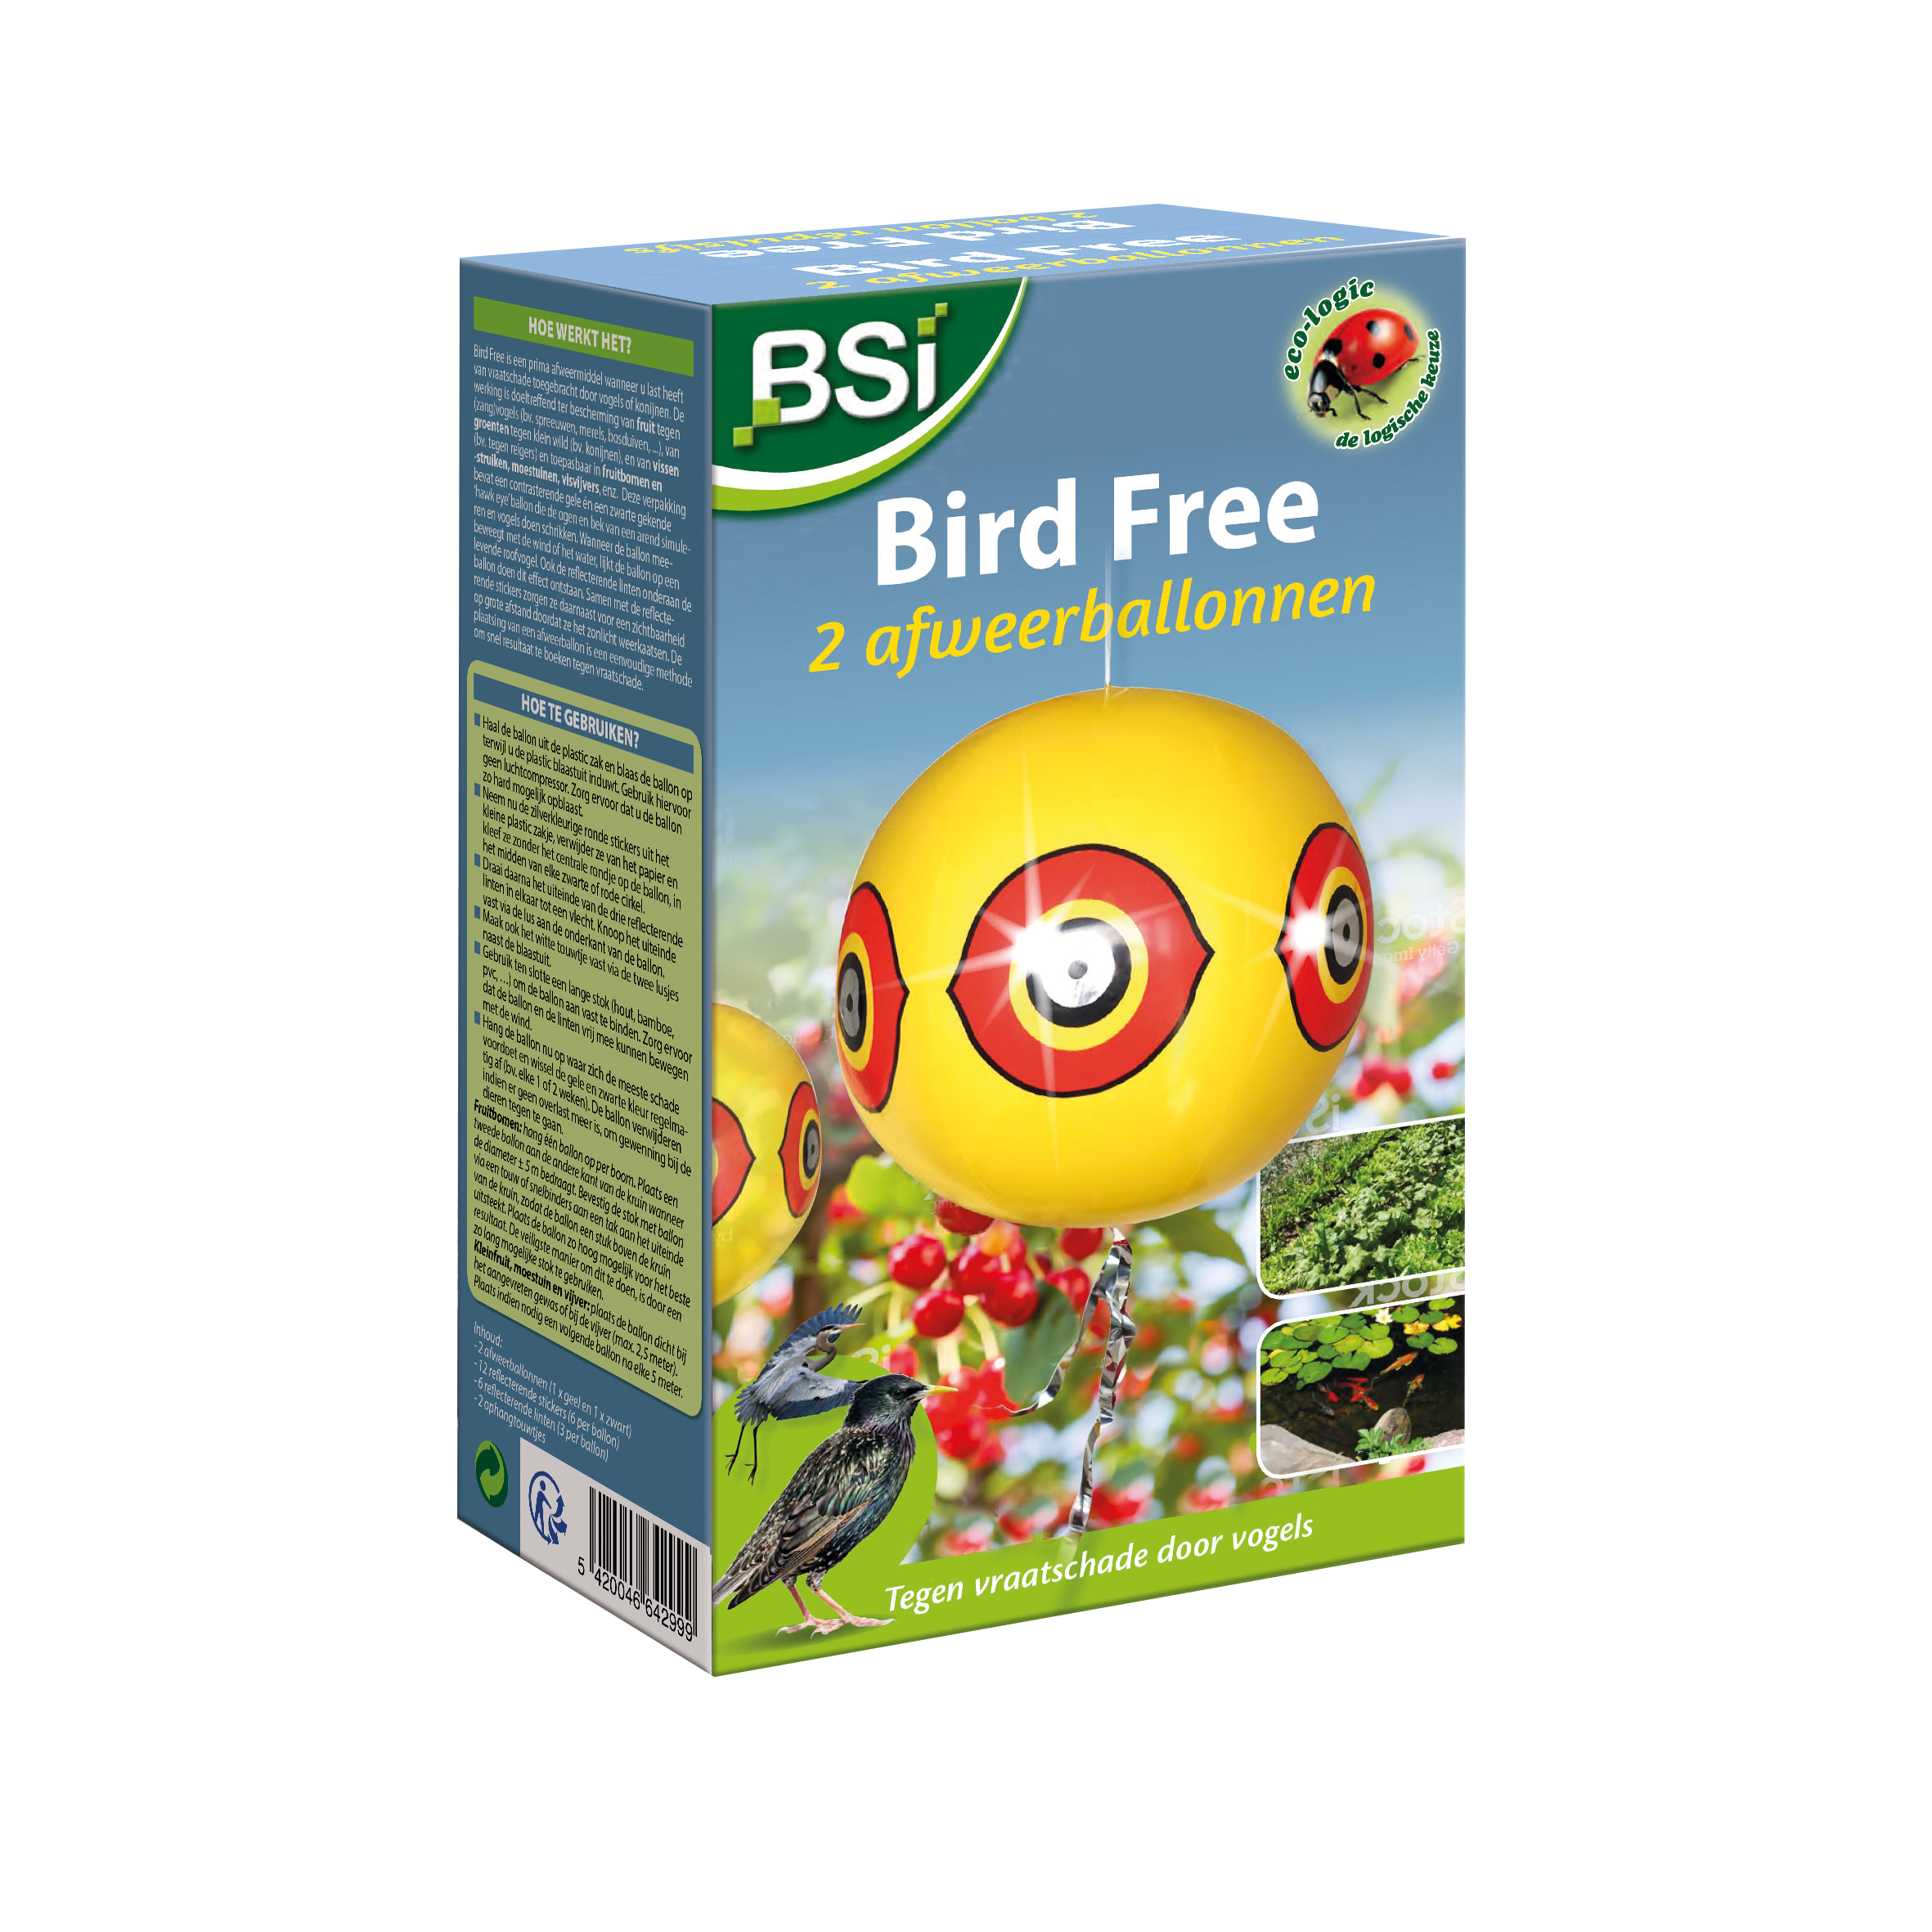 BSI Bird Free Afweerballon 2 st. image